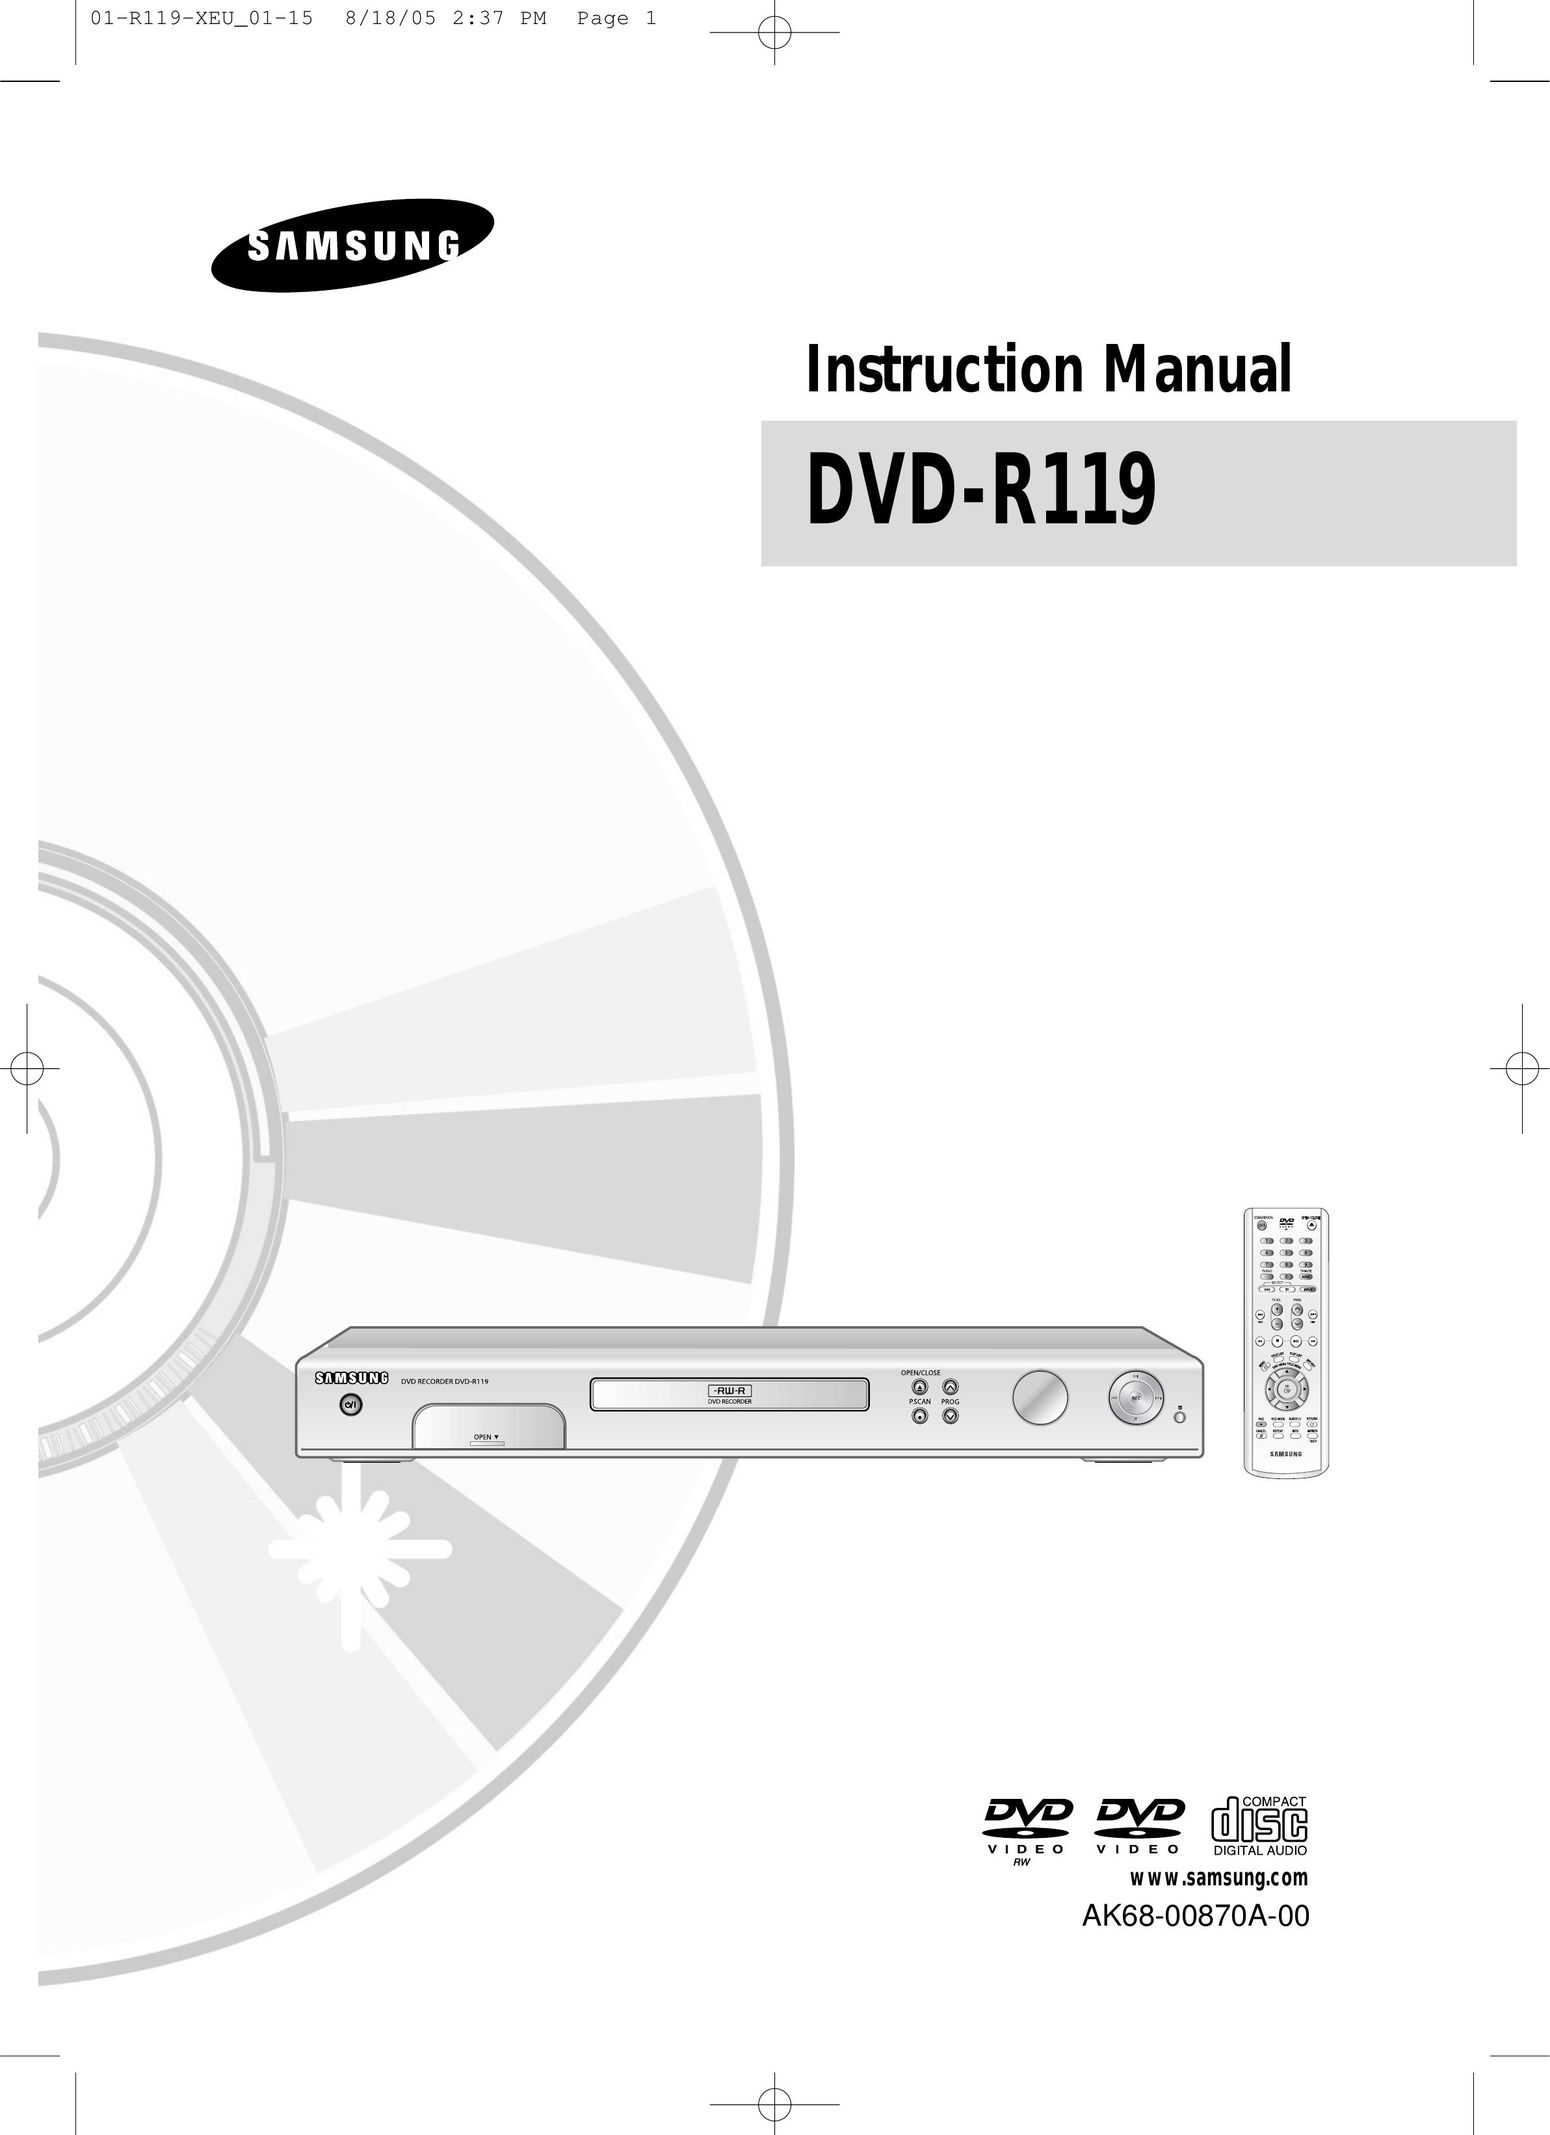 Samsung DVD-R119 DVD Recorder User Manual